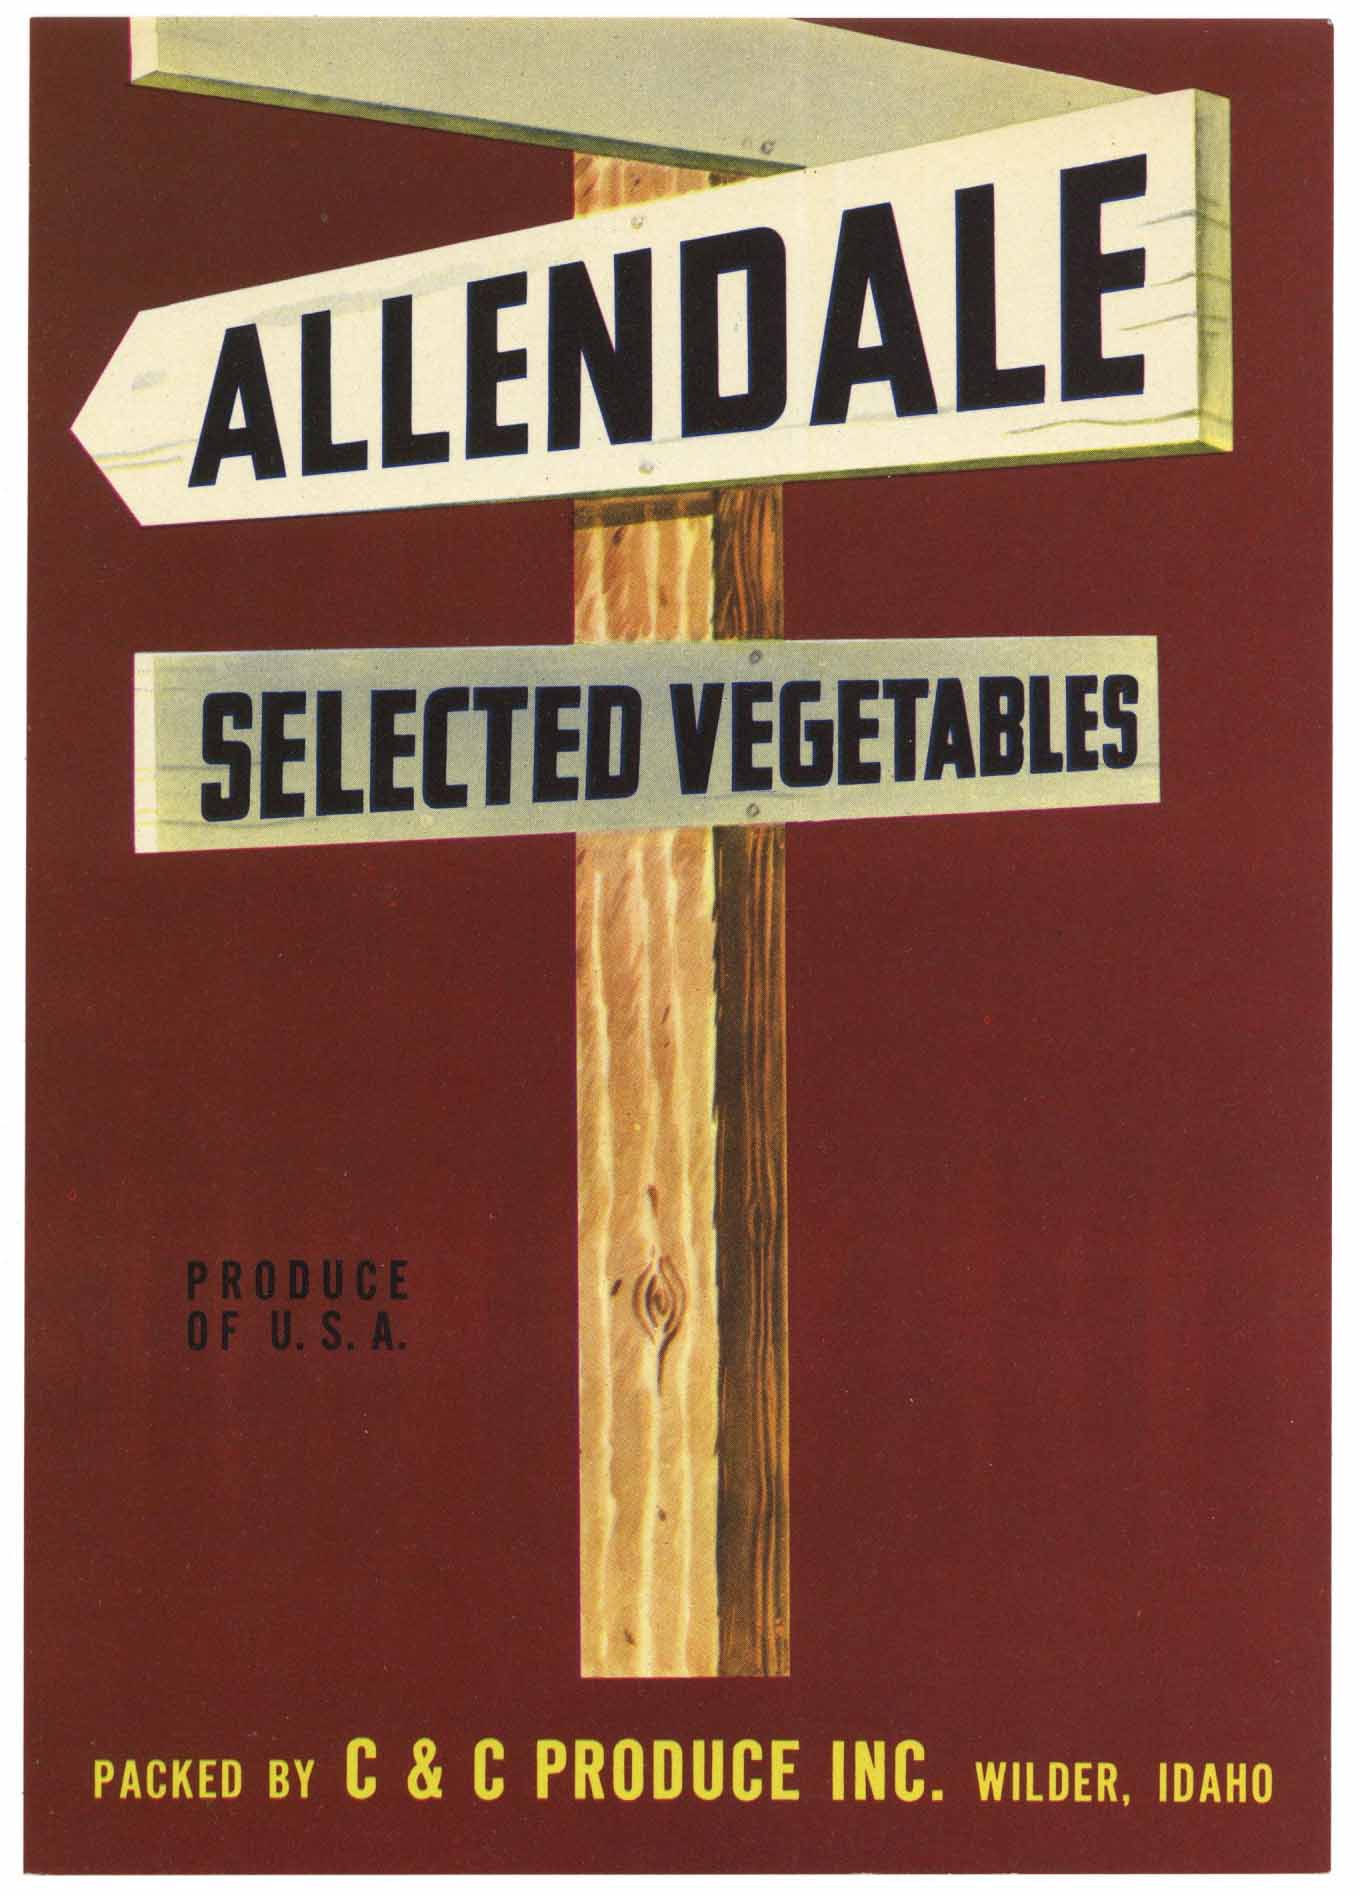 Allendale Brand Vintage Wilder Idaho Vegetable Crate Label